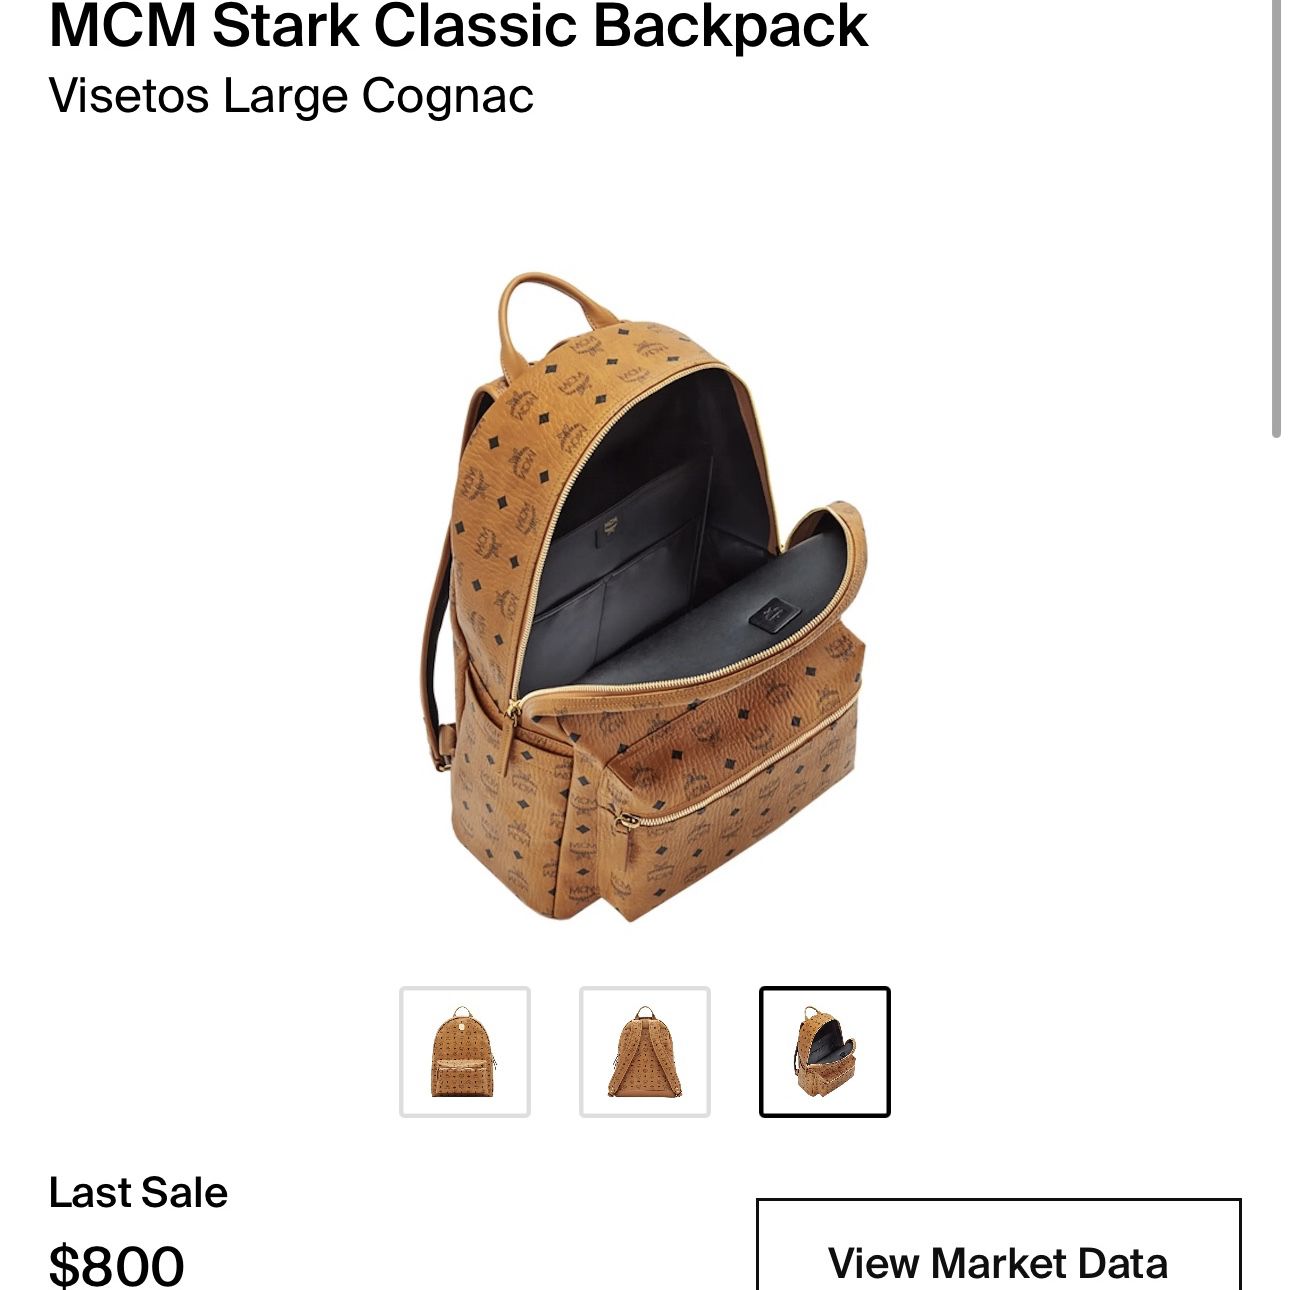 MCM Stark Classic Backpack in Visetos